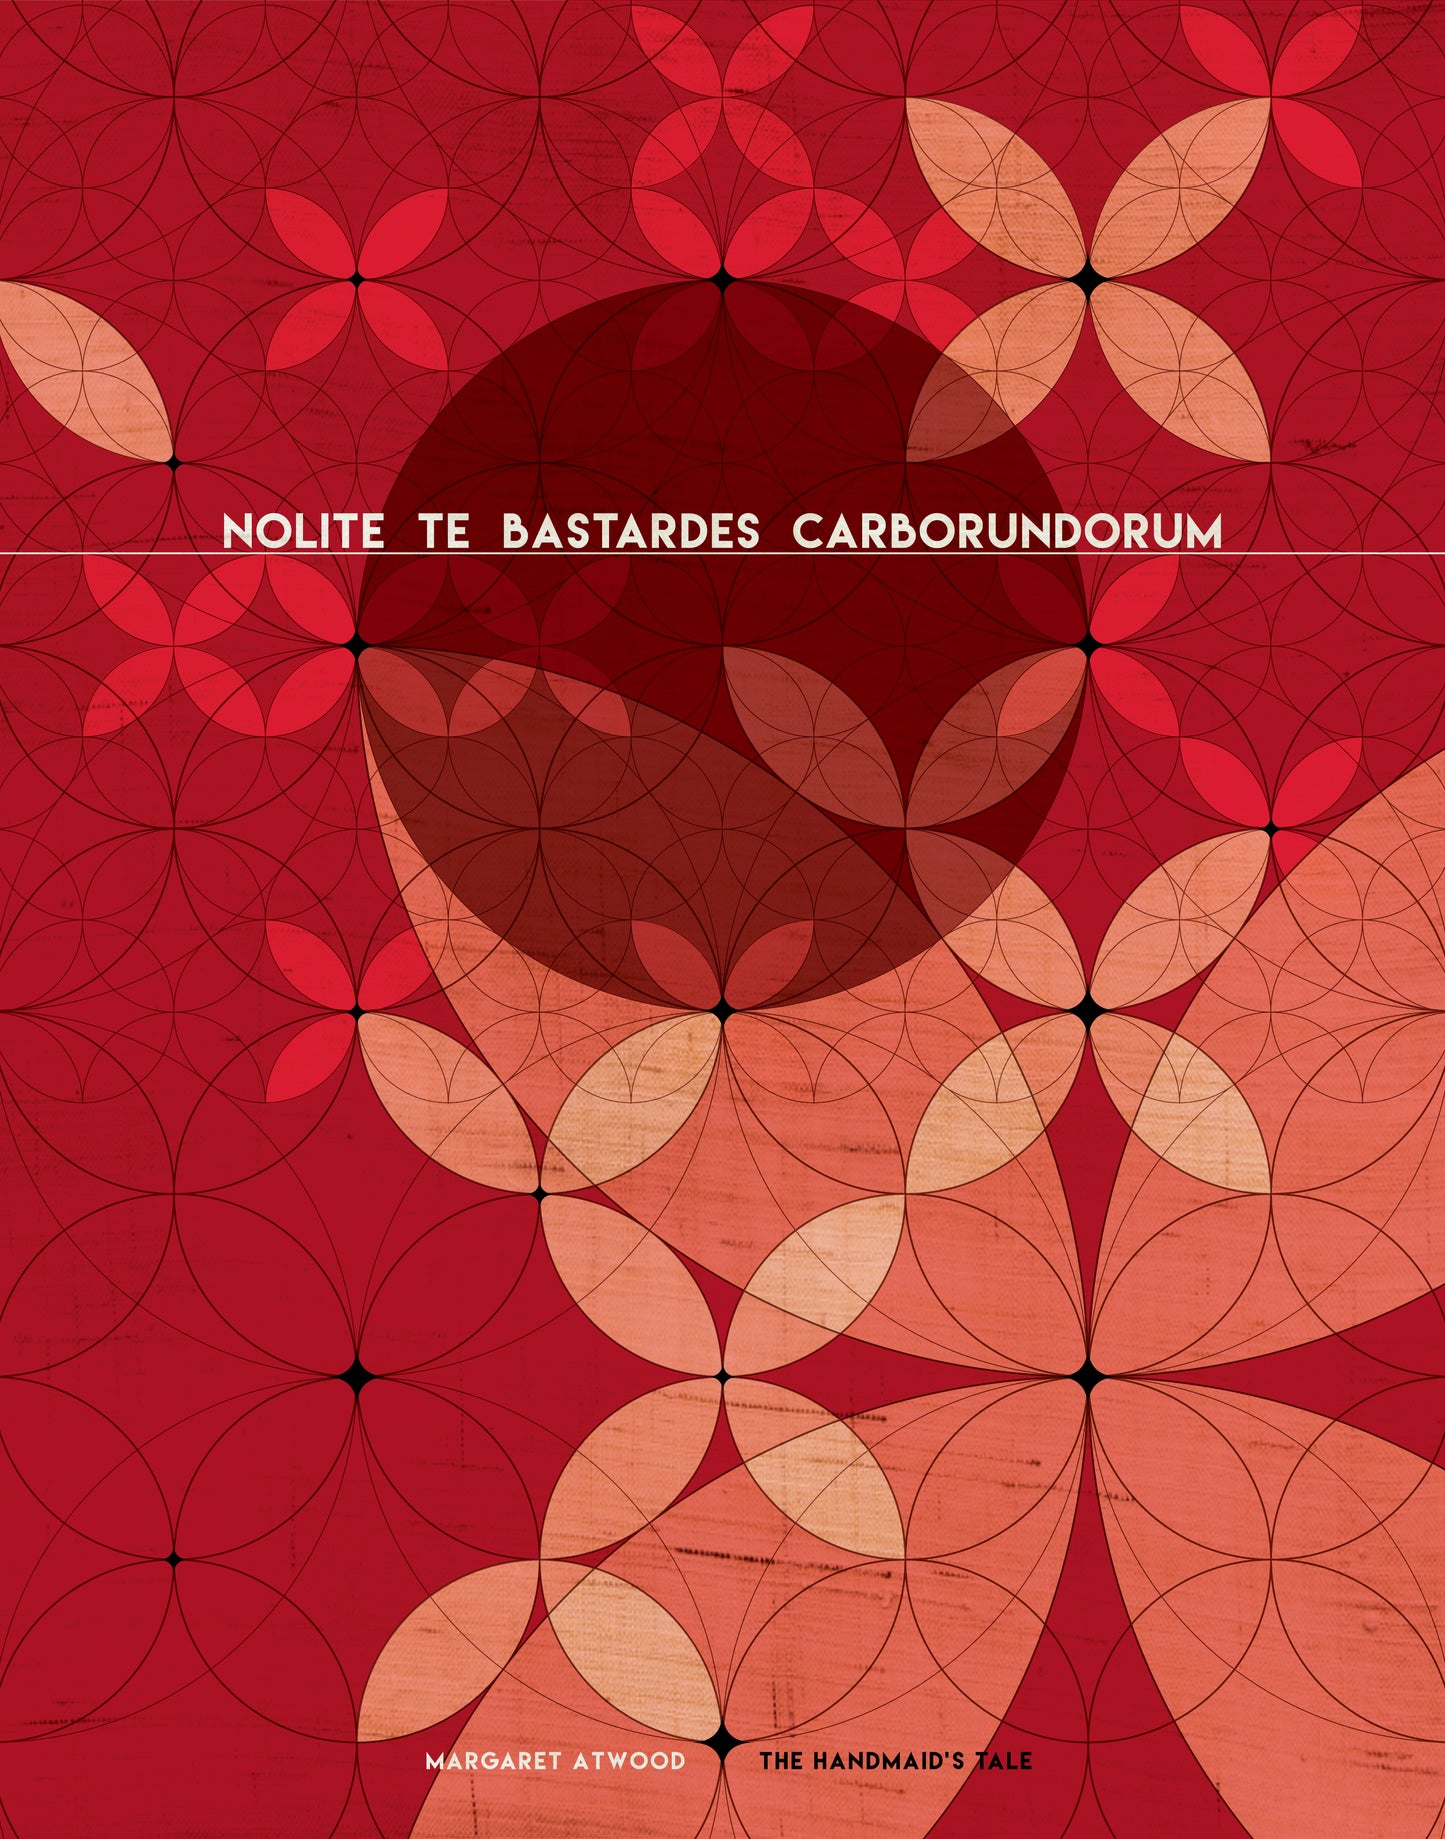 Margaret Atwood / The Handmaid's Tale / Nolite Te Bastardes Carborundorum